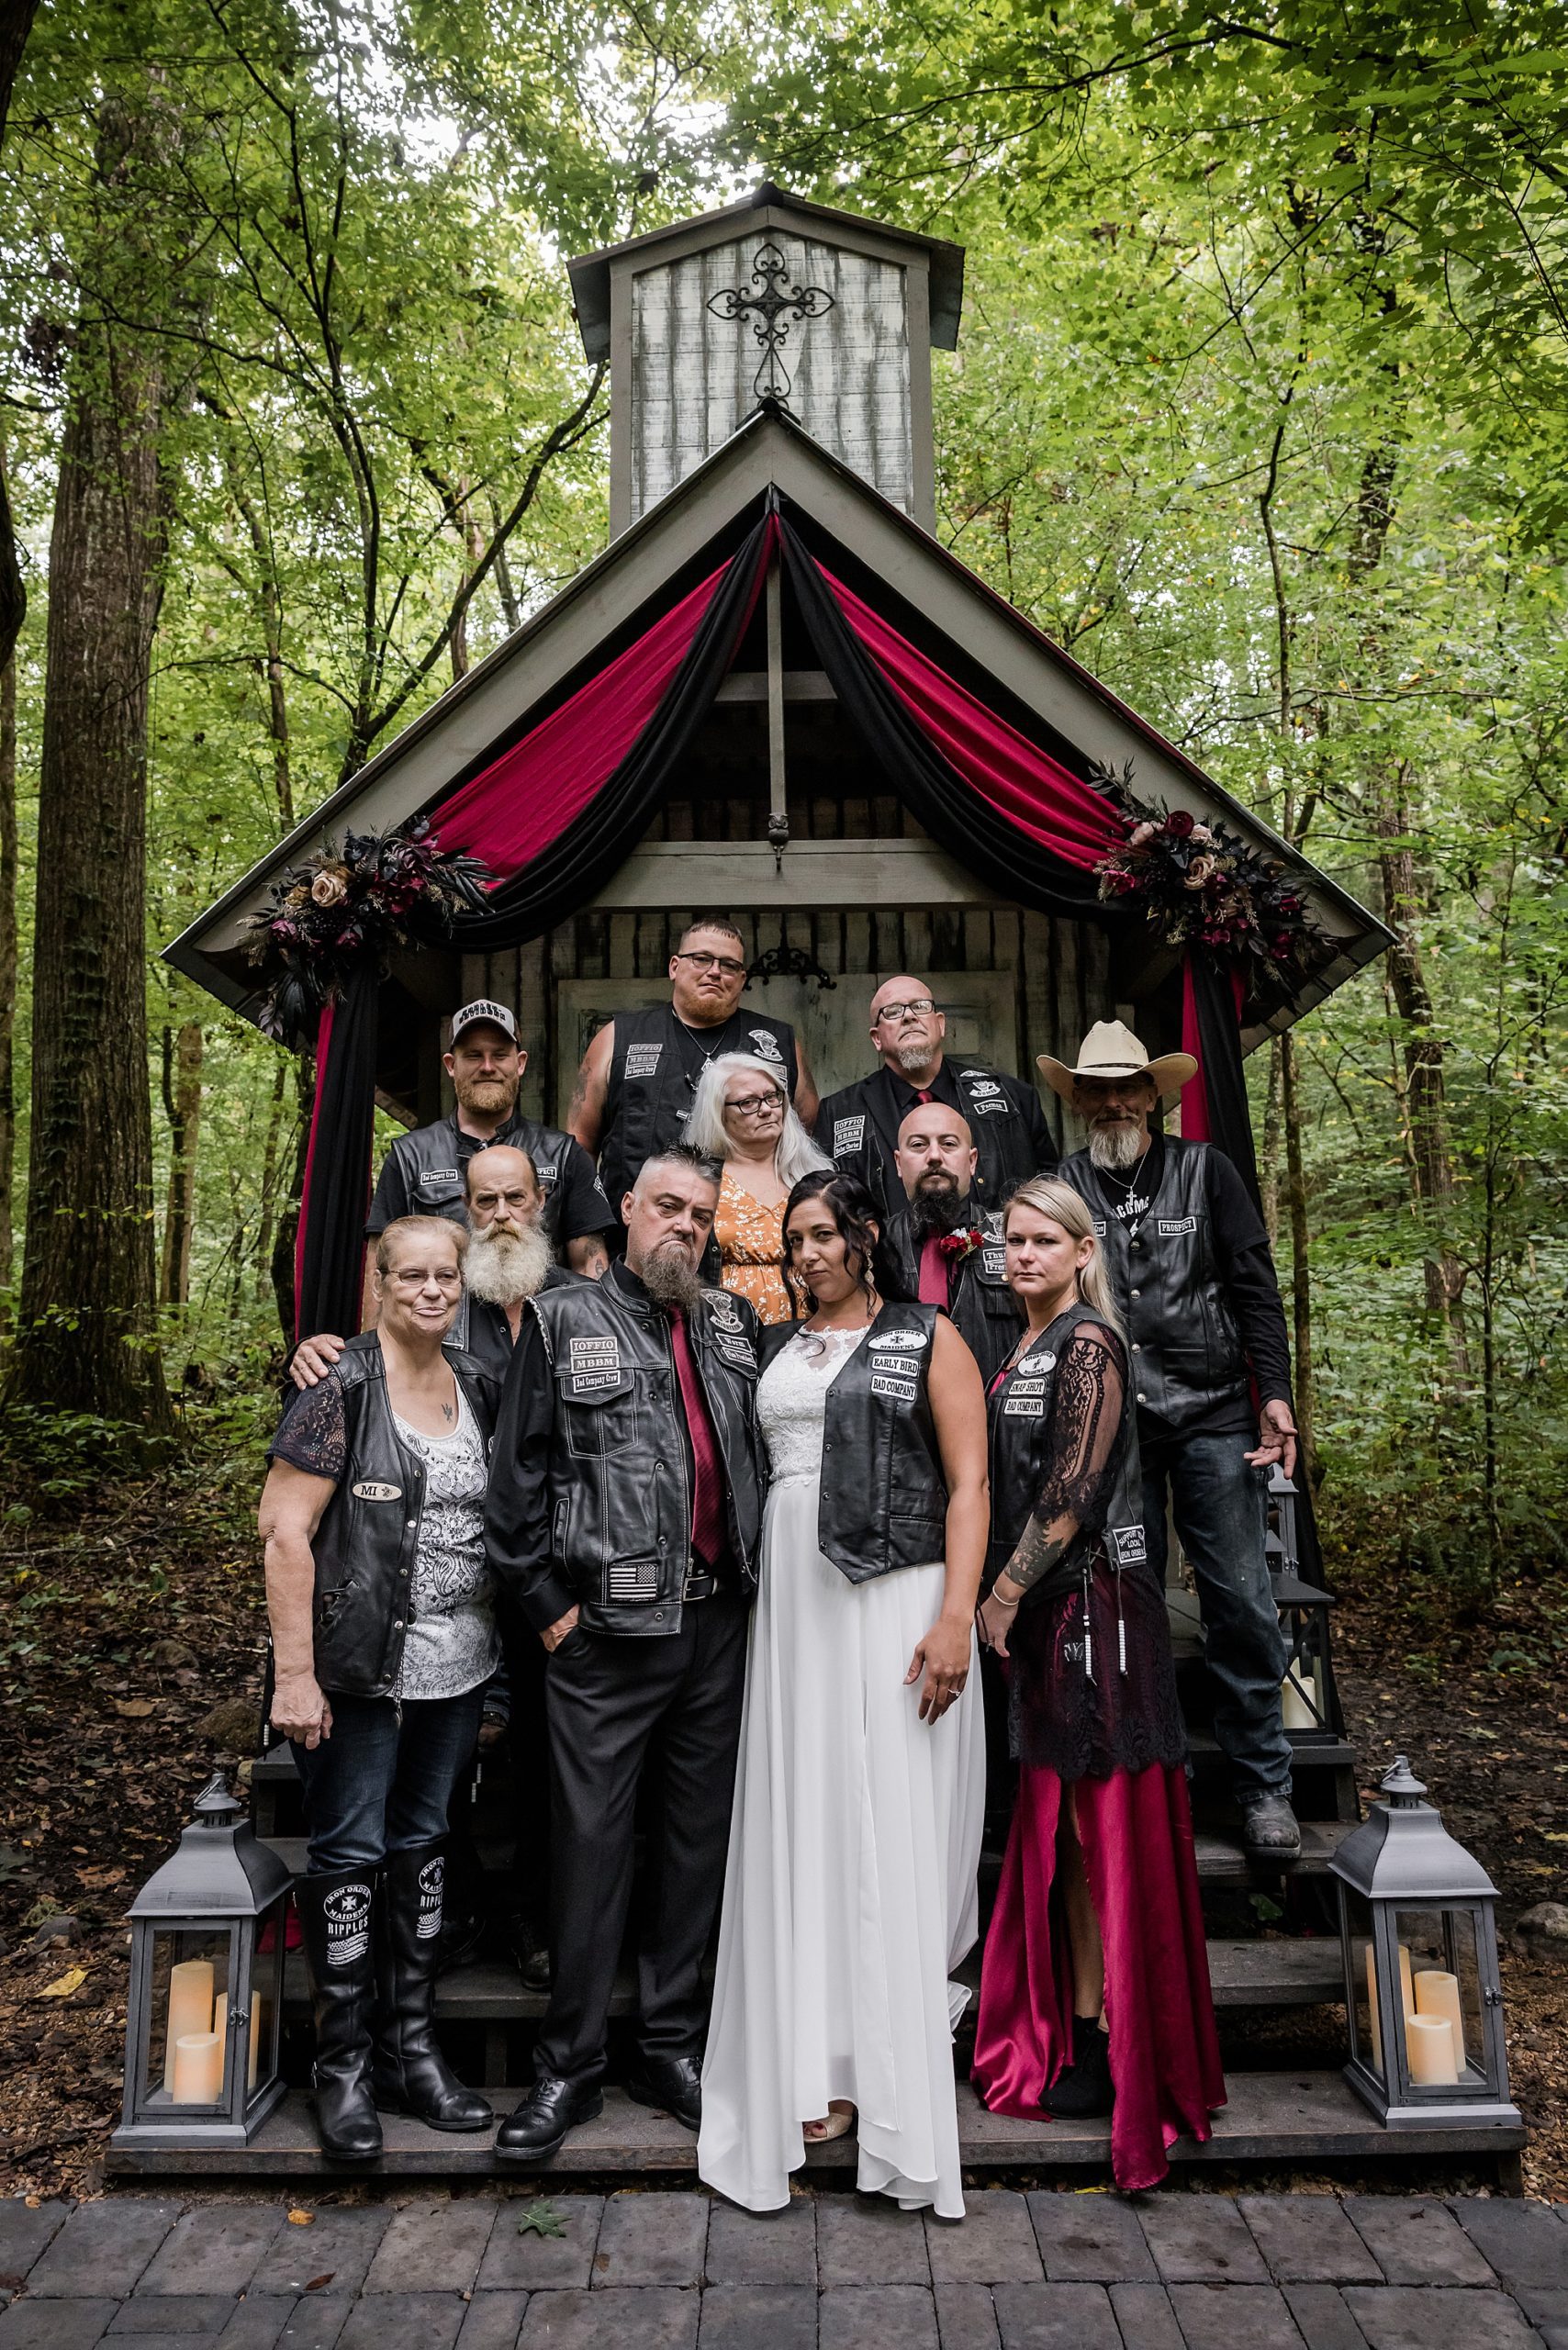 Edgy Motorcycle Club Wedding- Family Portrait